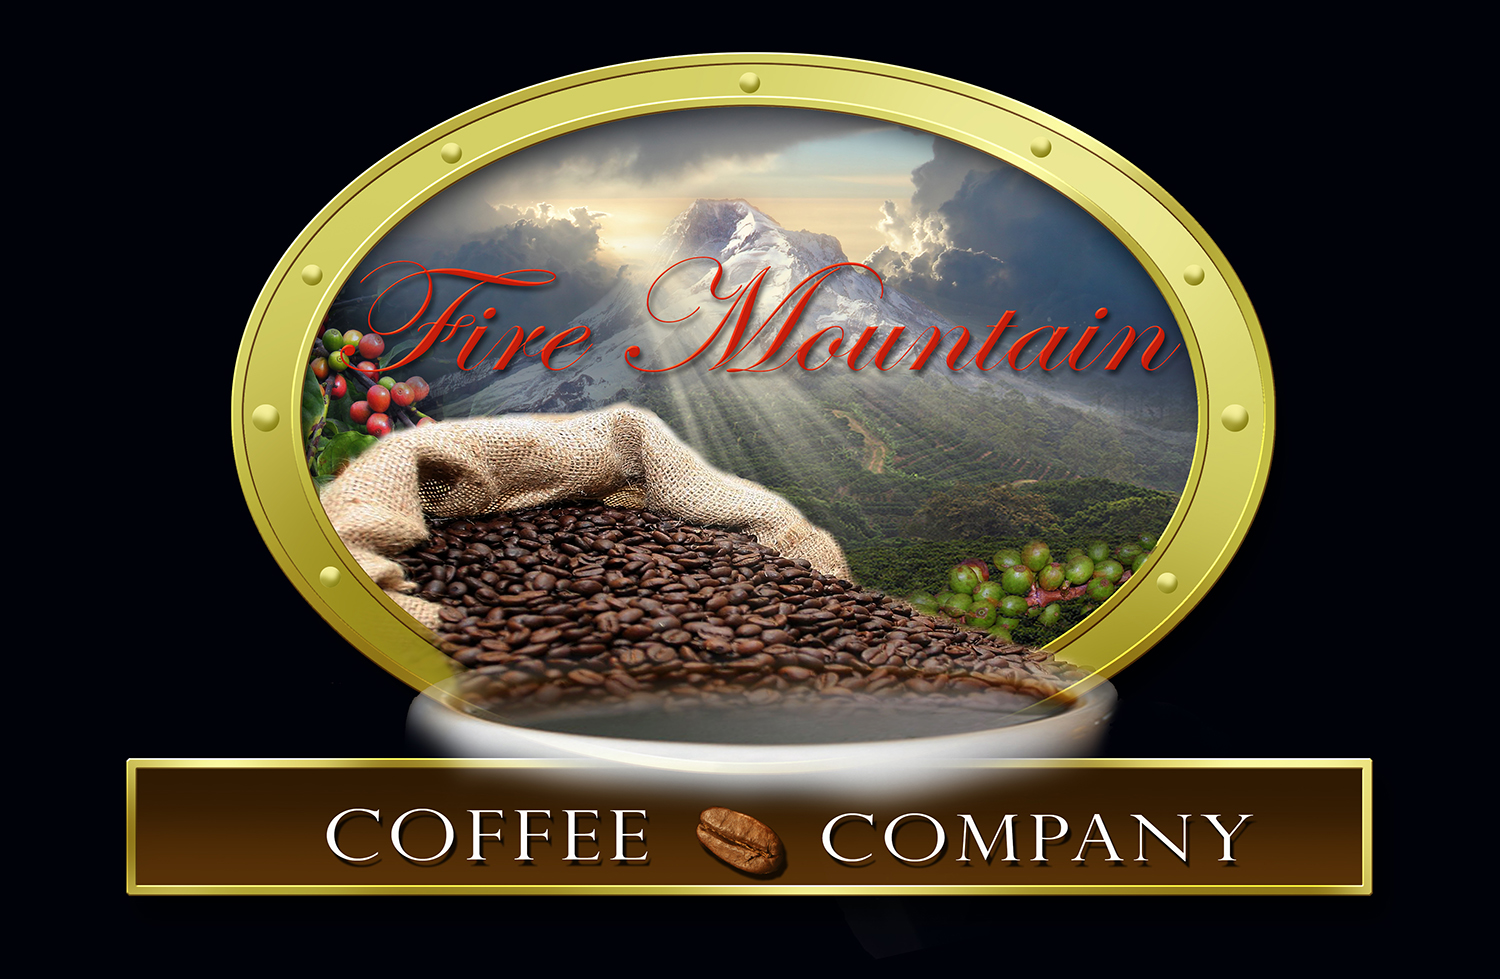 Fire Mountain Coffee